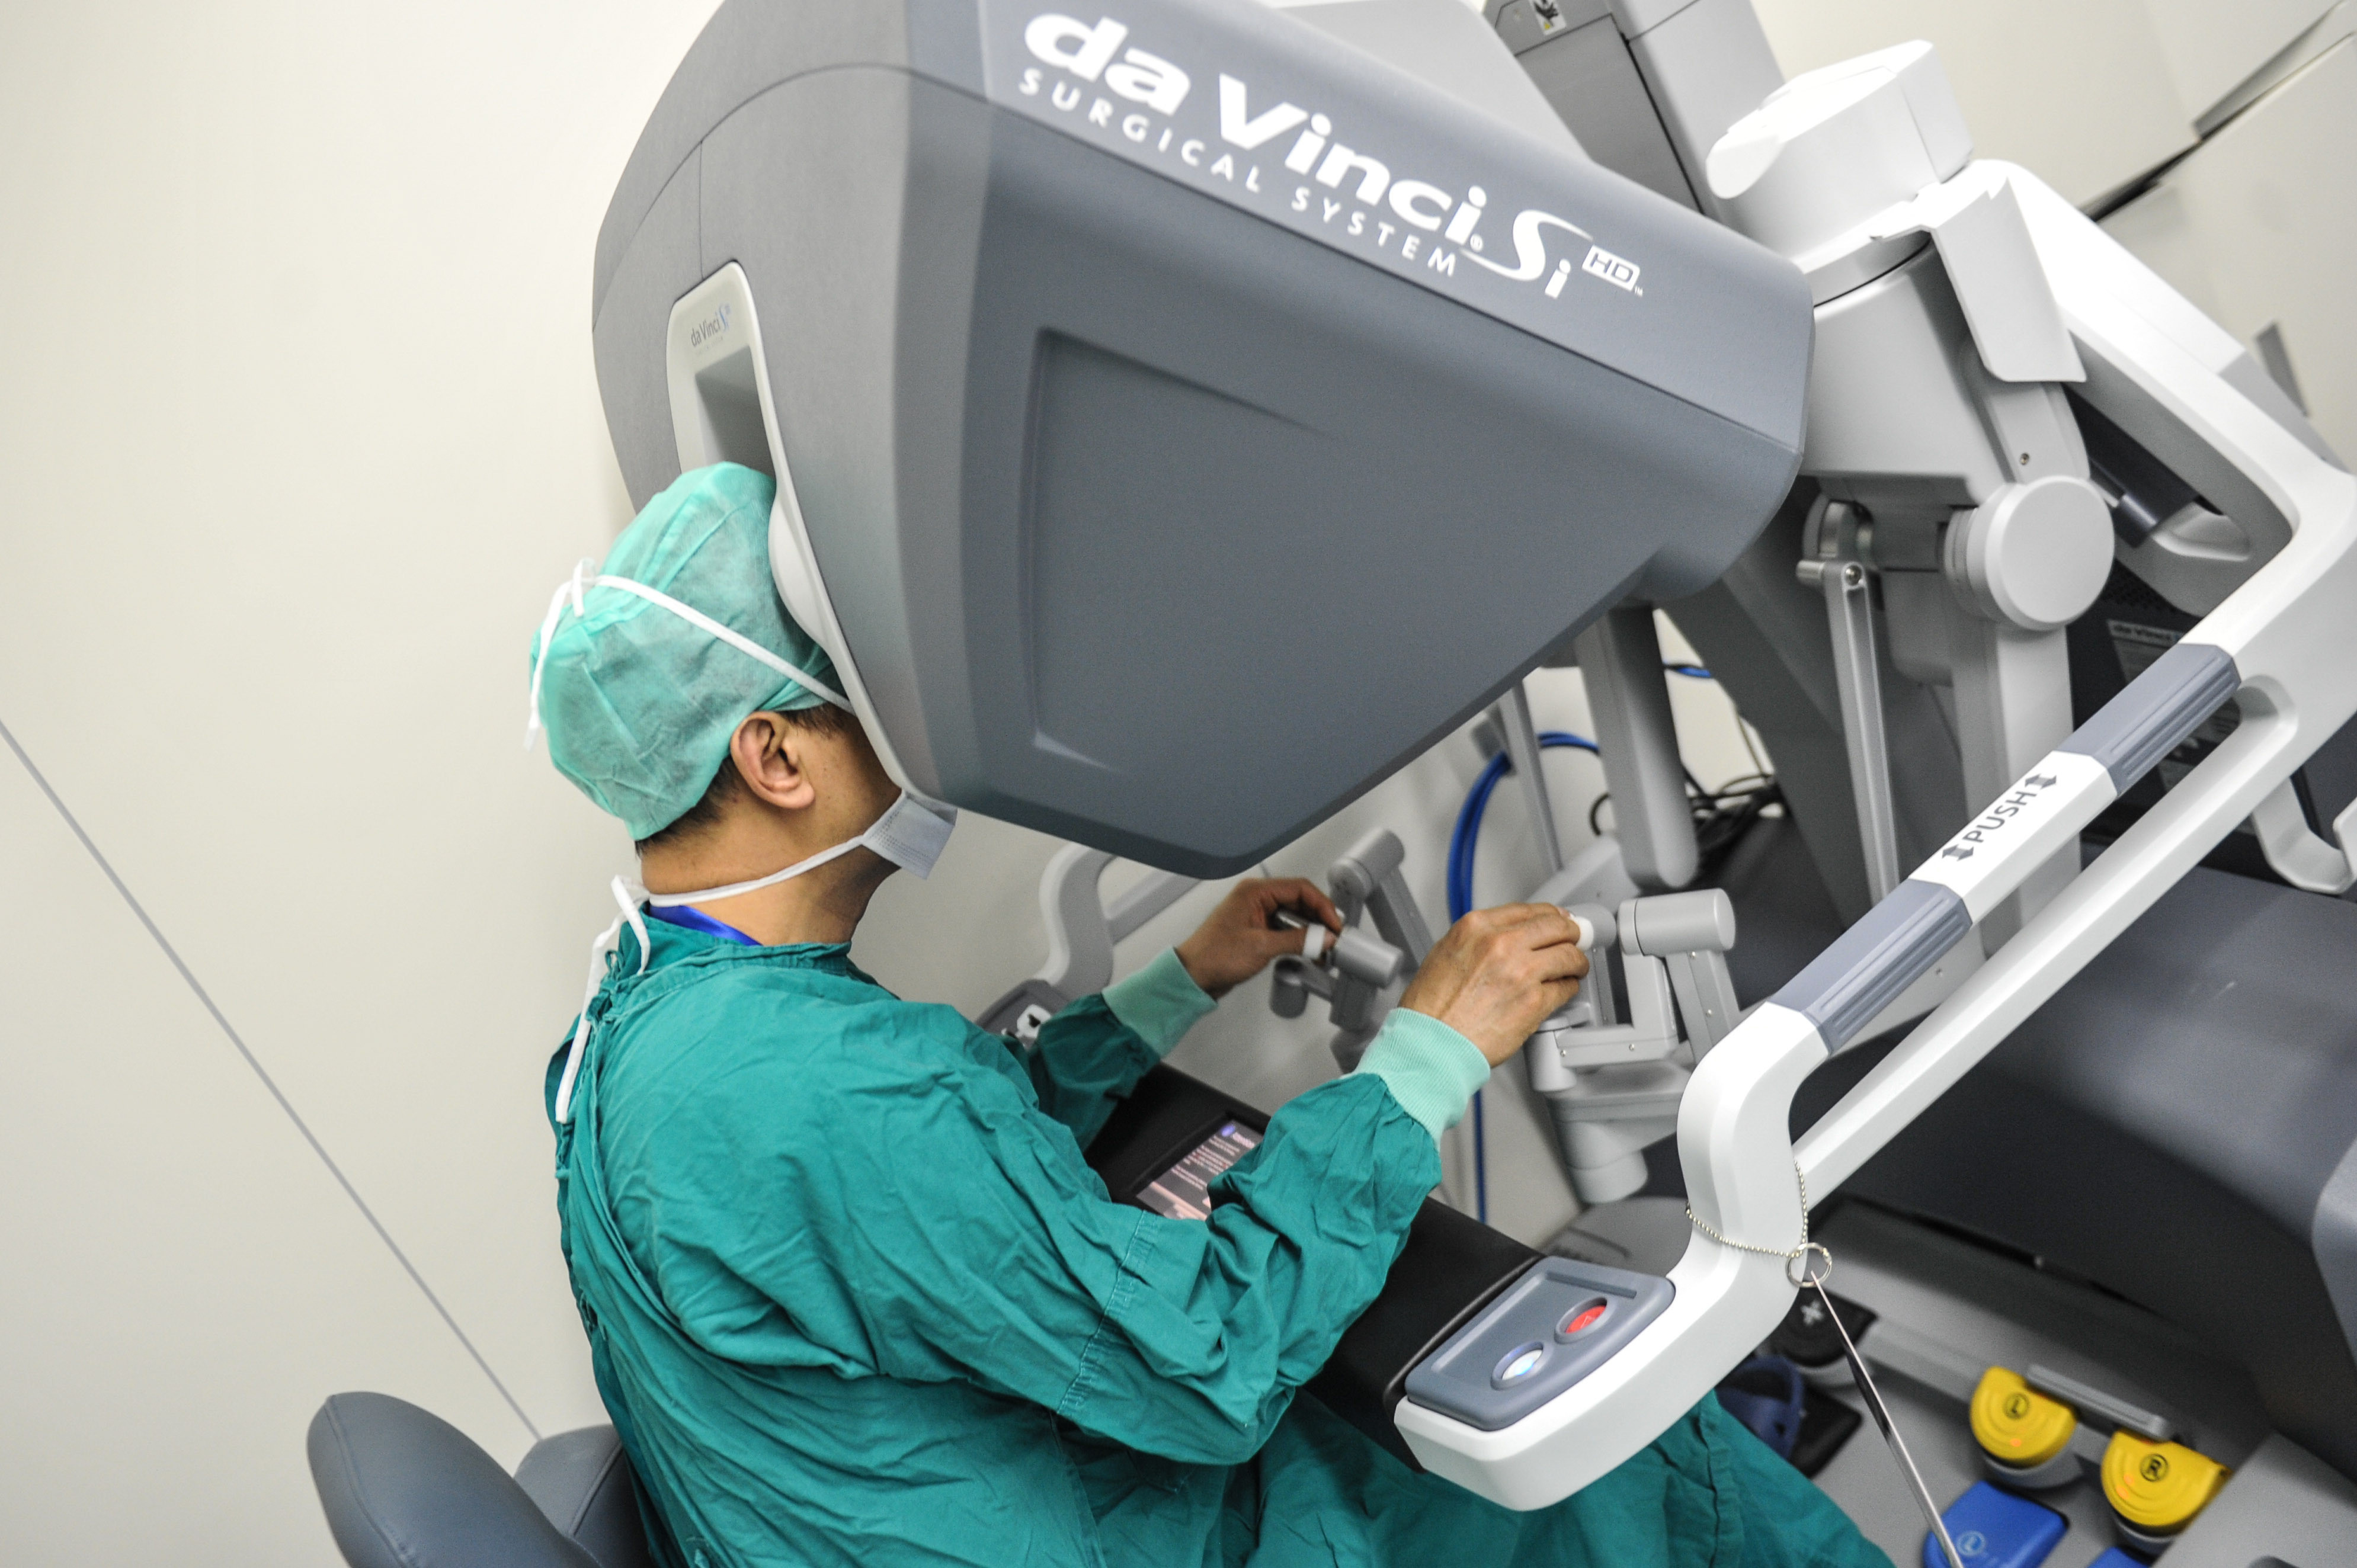 surgeons operate a da vinci surgical robot